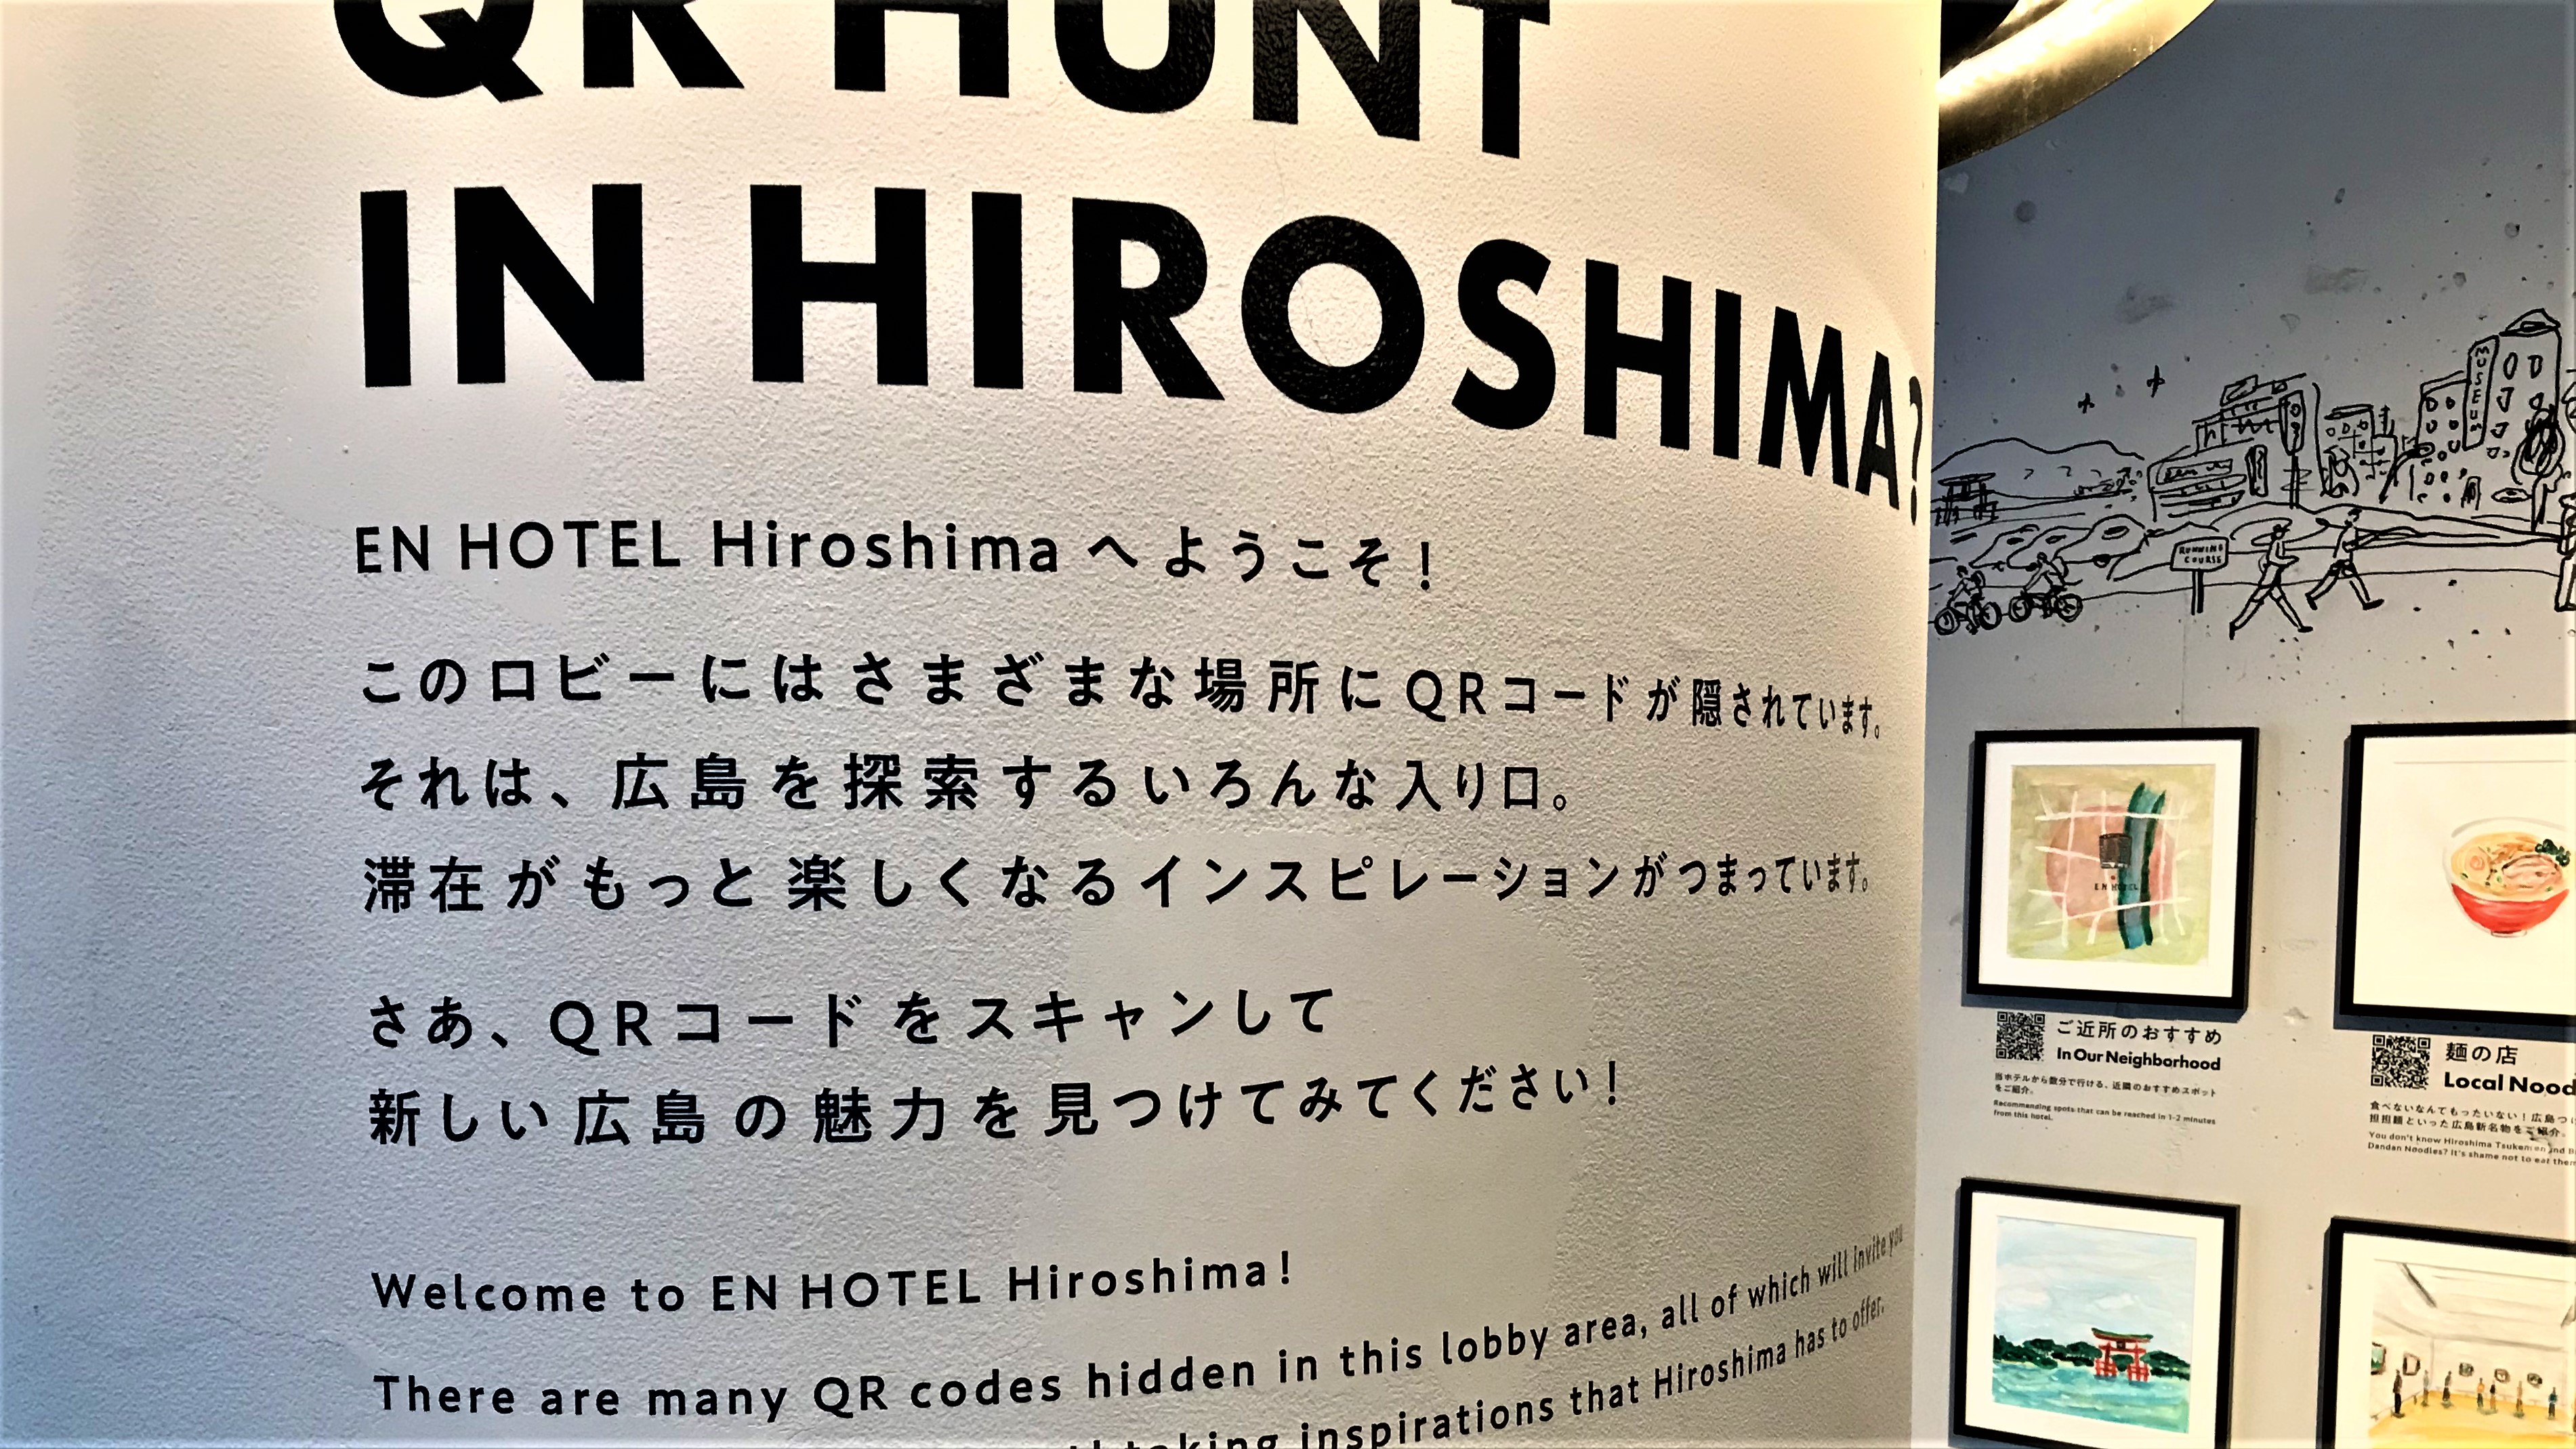 QR HUNT IN HIROSHIMA